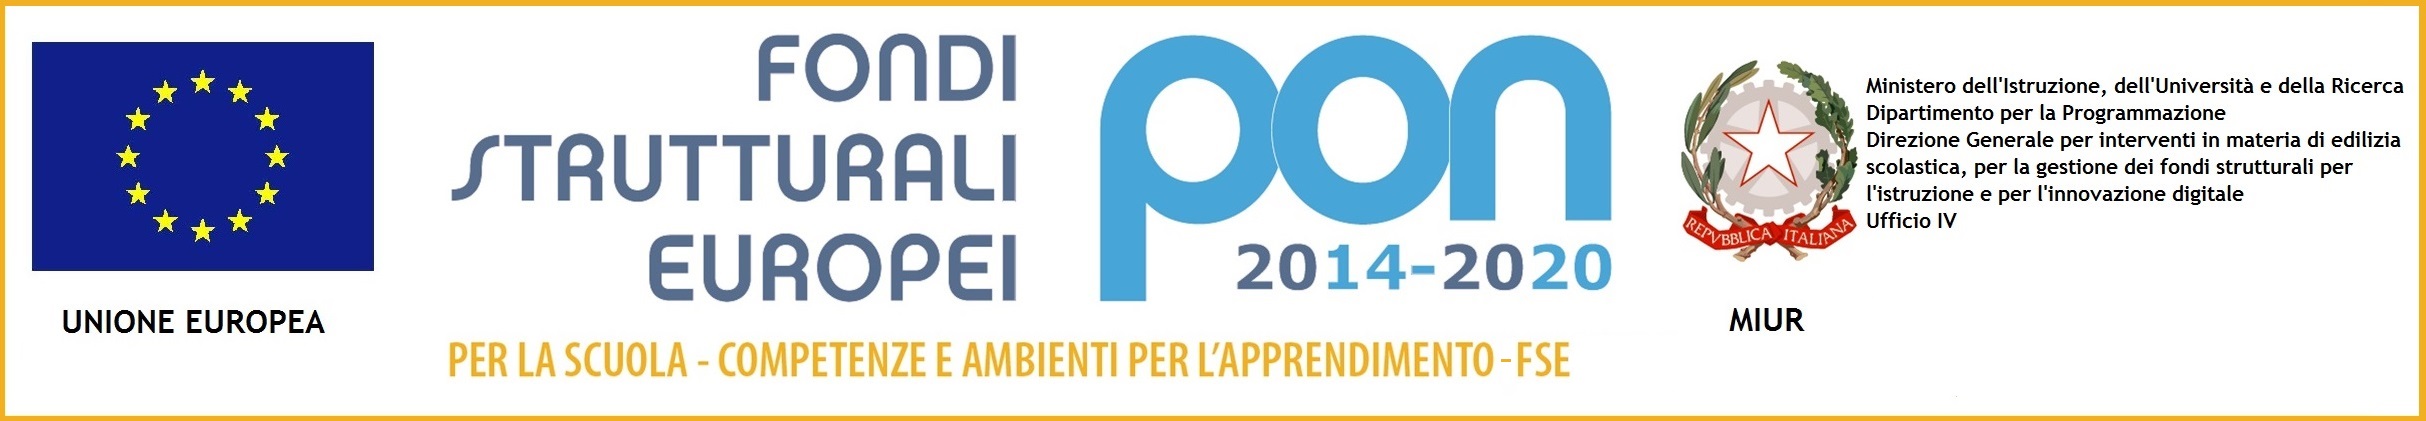 banner PON 2014-2020